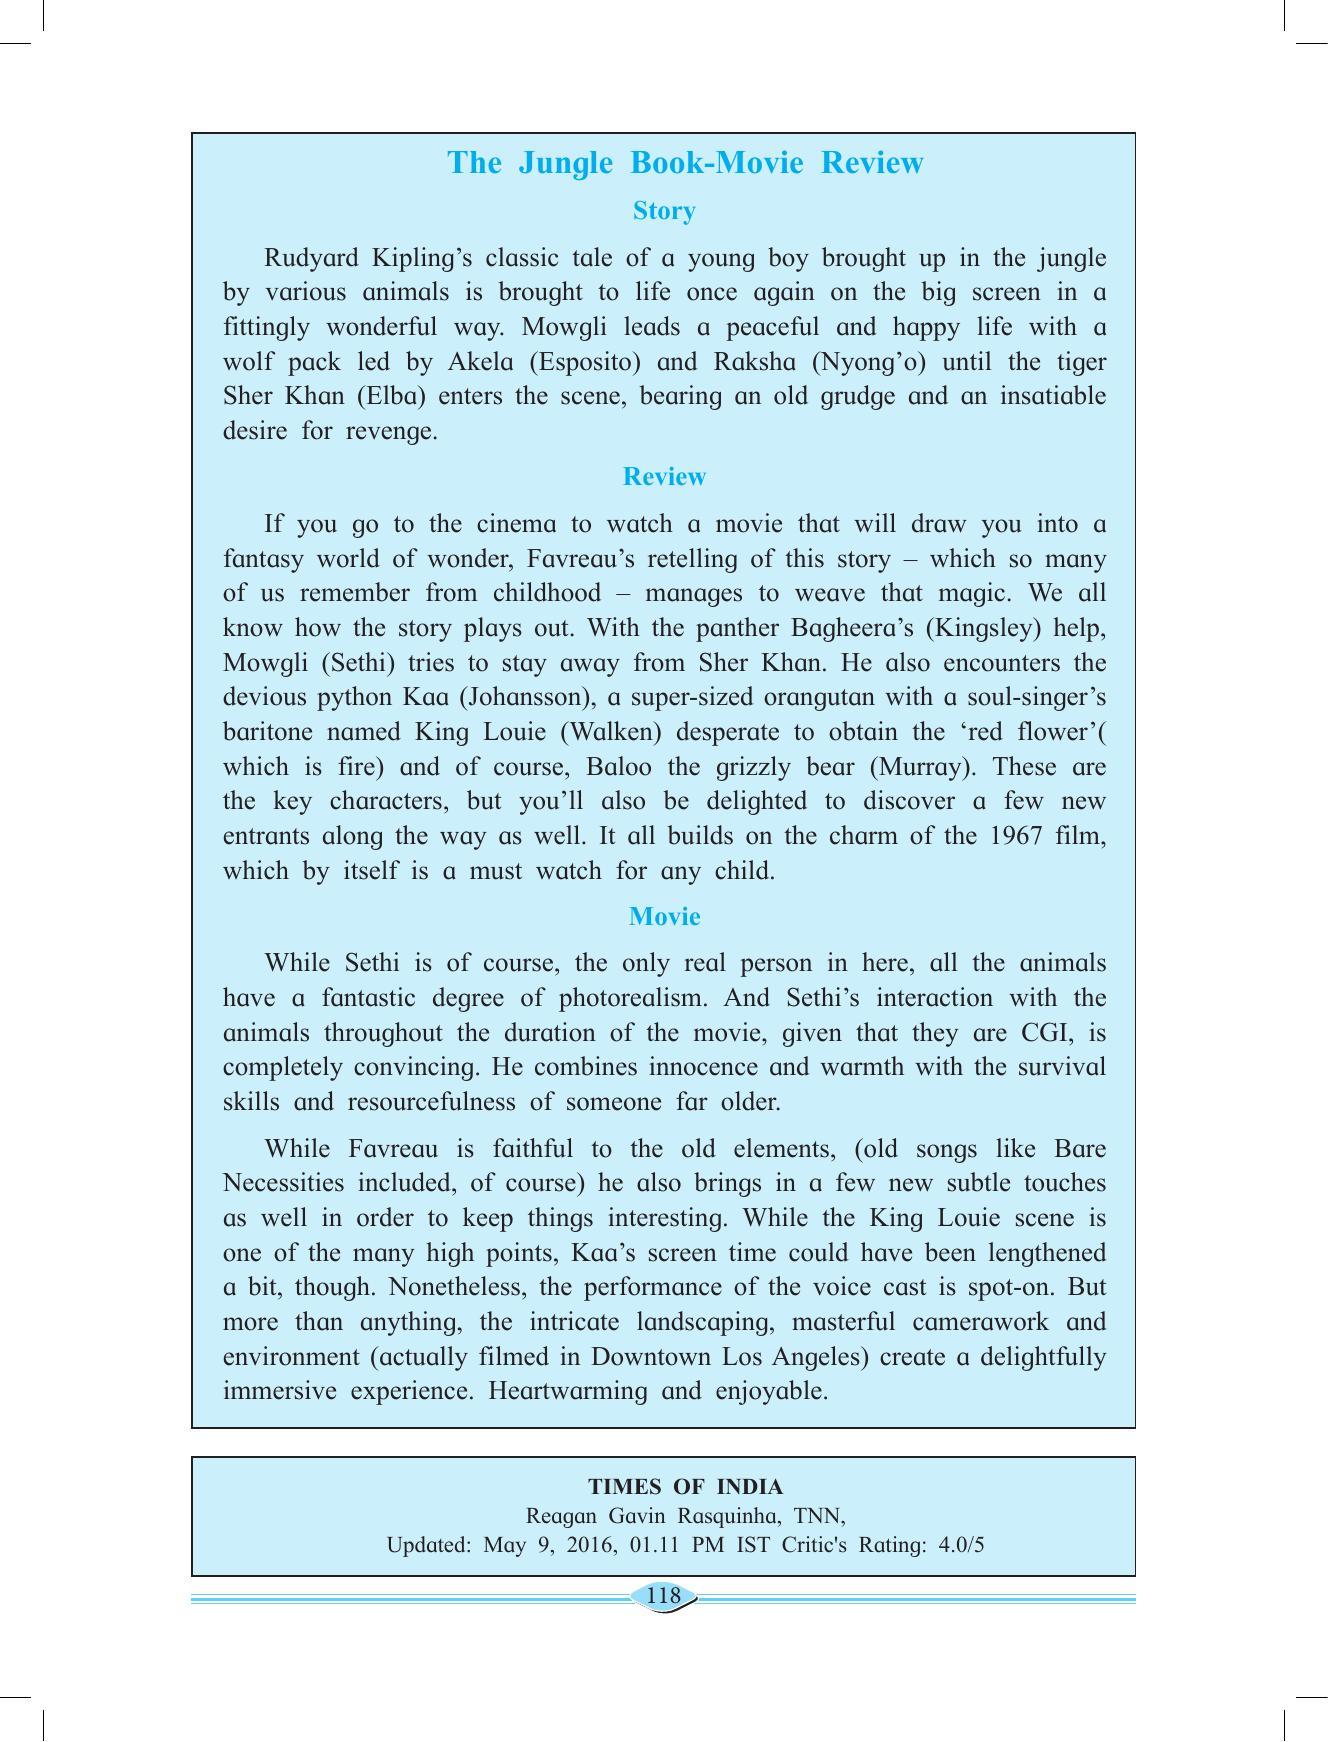 Maharashtra Board Class 11 English Textbook - Page 132